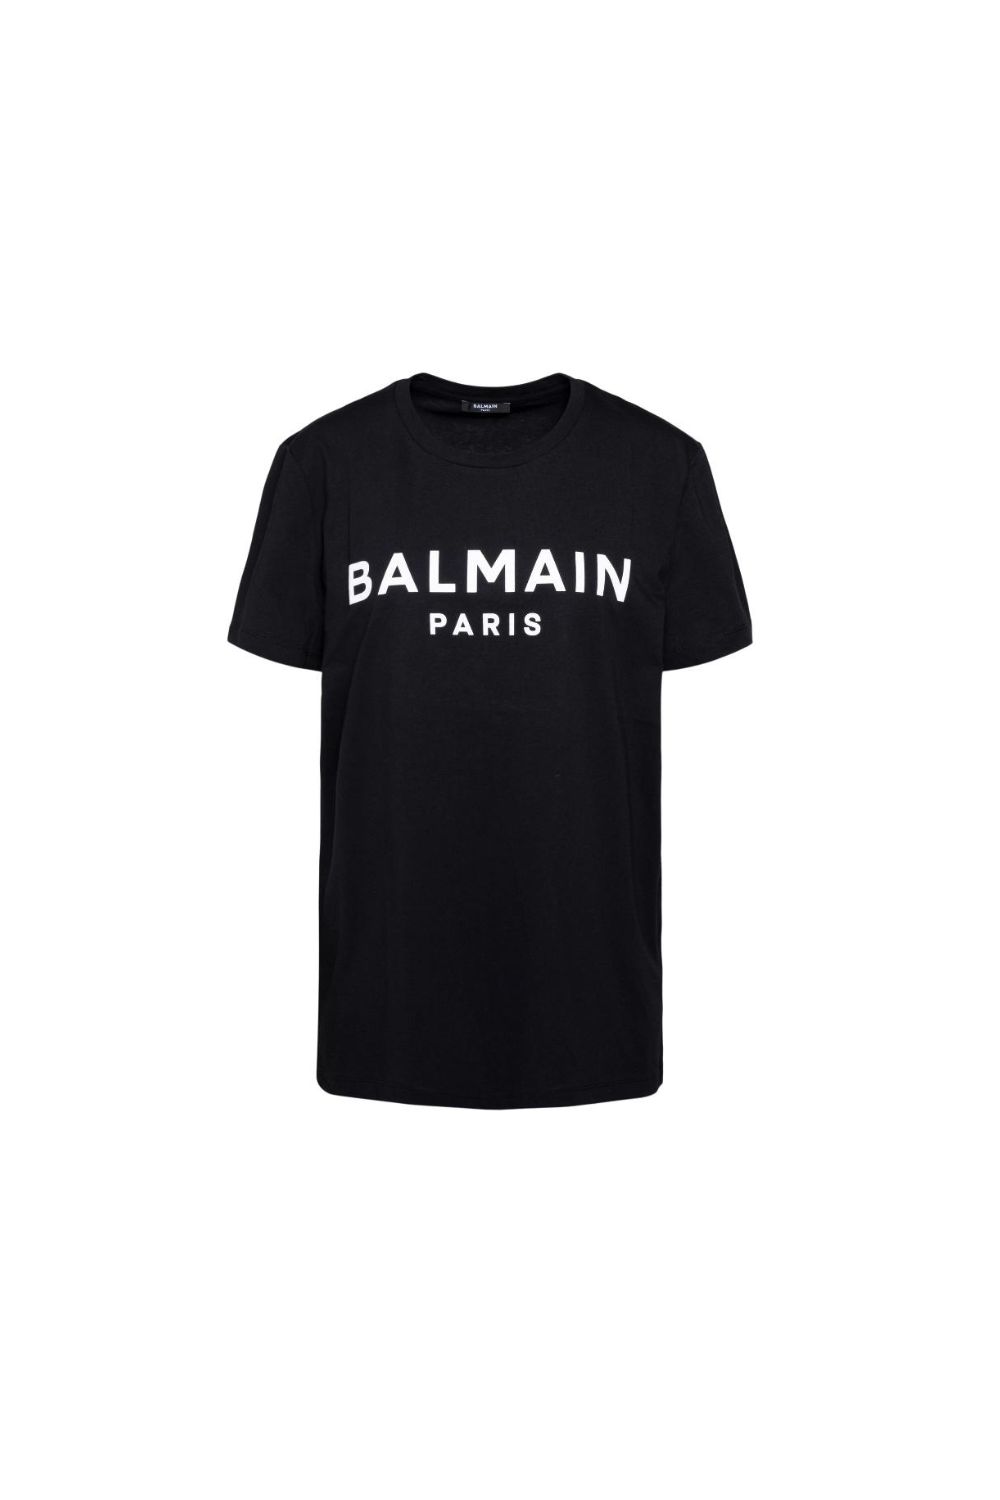 Balmain Paris T shirt con logo